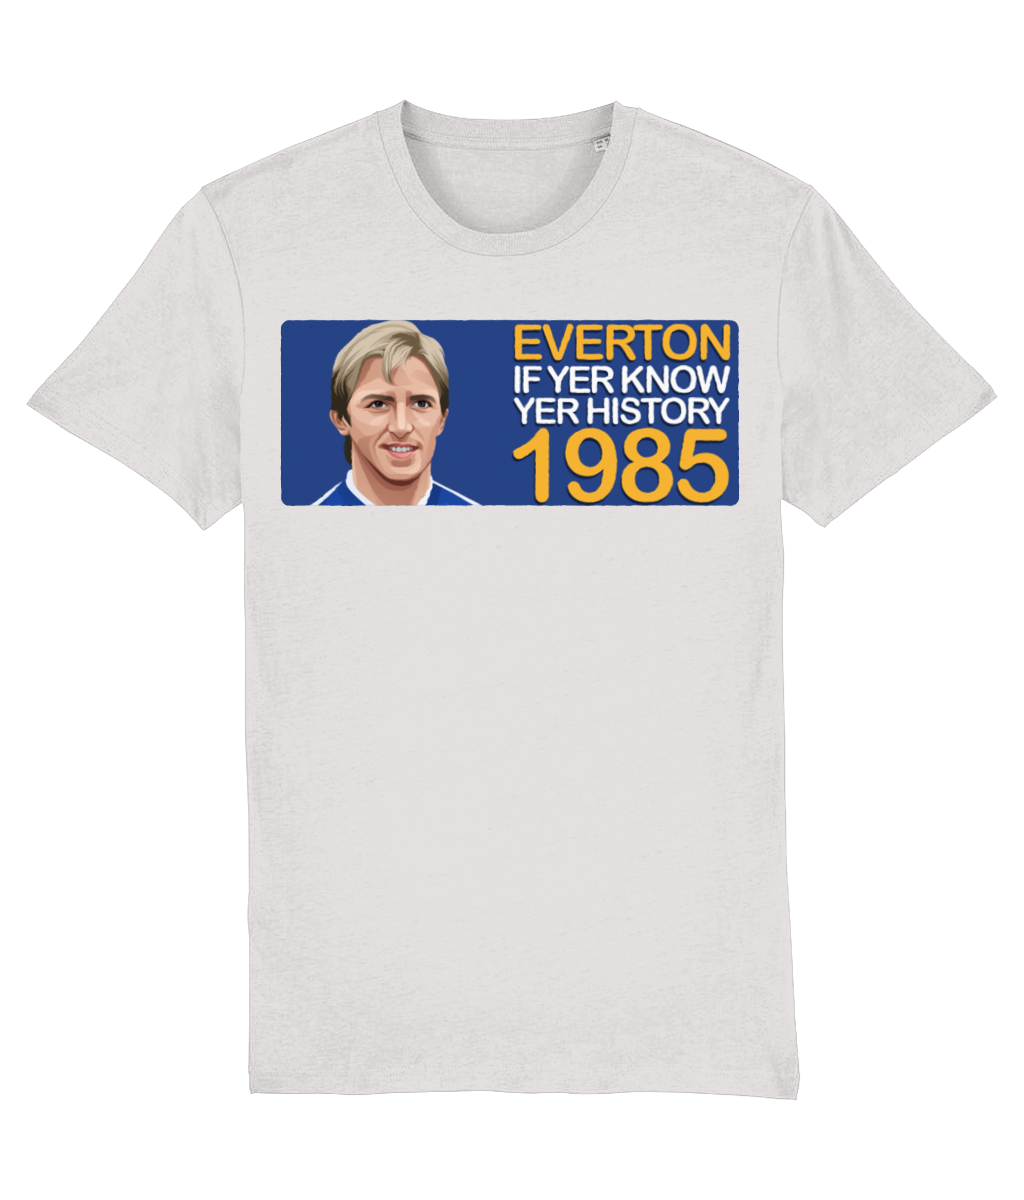 Everton 1985 Gary Stevens If Yer Know Yer History Unisex T-Shirt Stanley/Stella Retrotext Cream Heather Grey XX-Small 